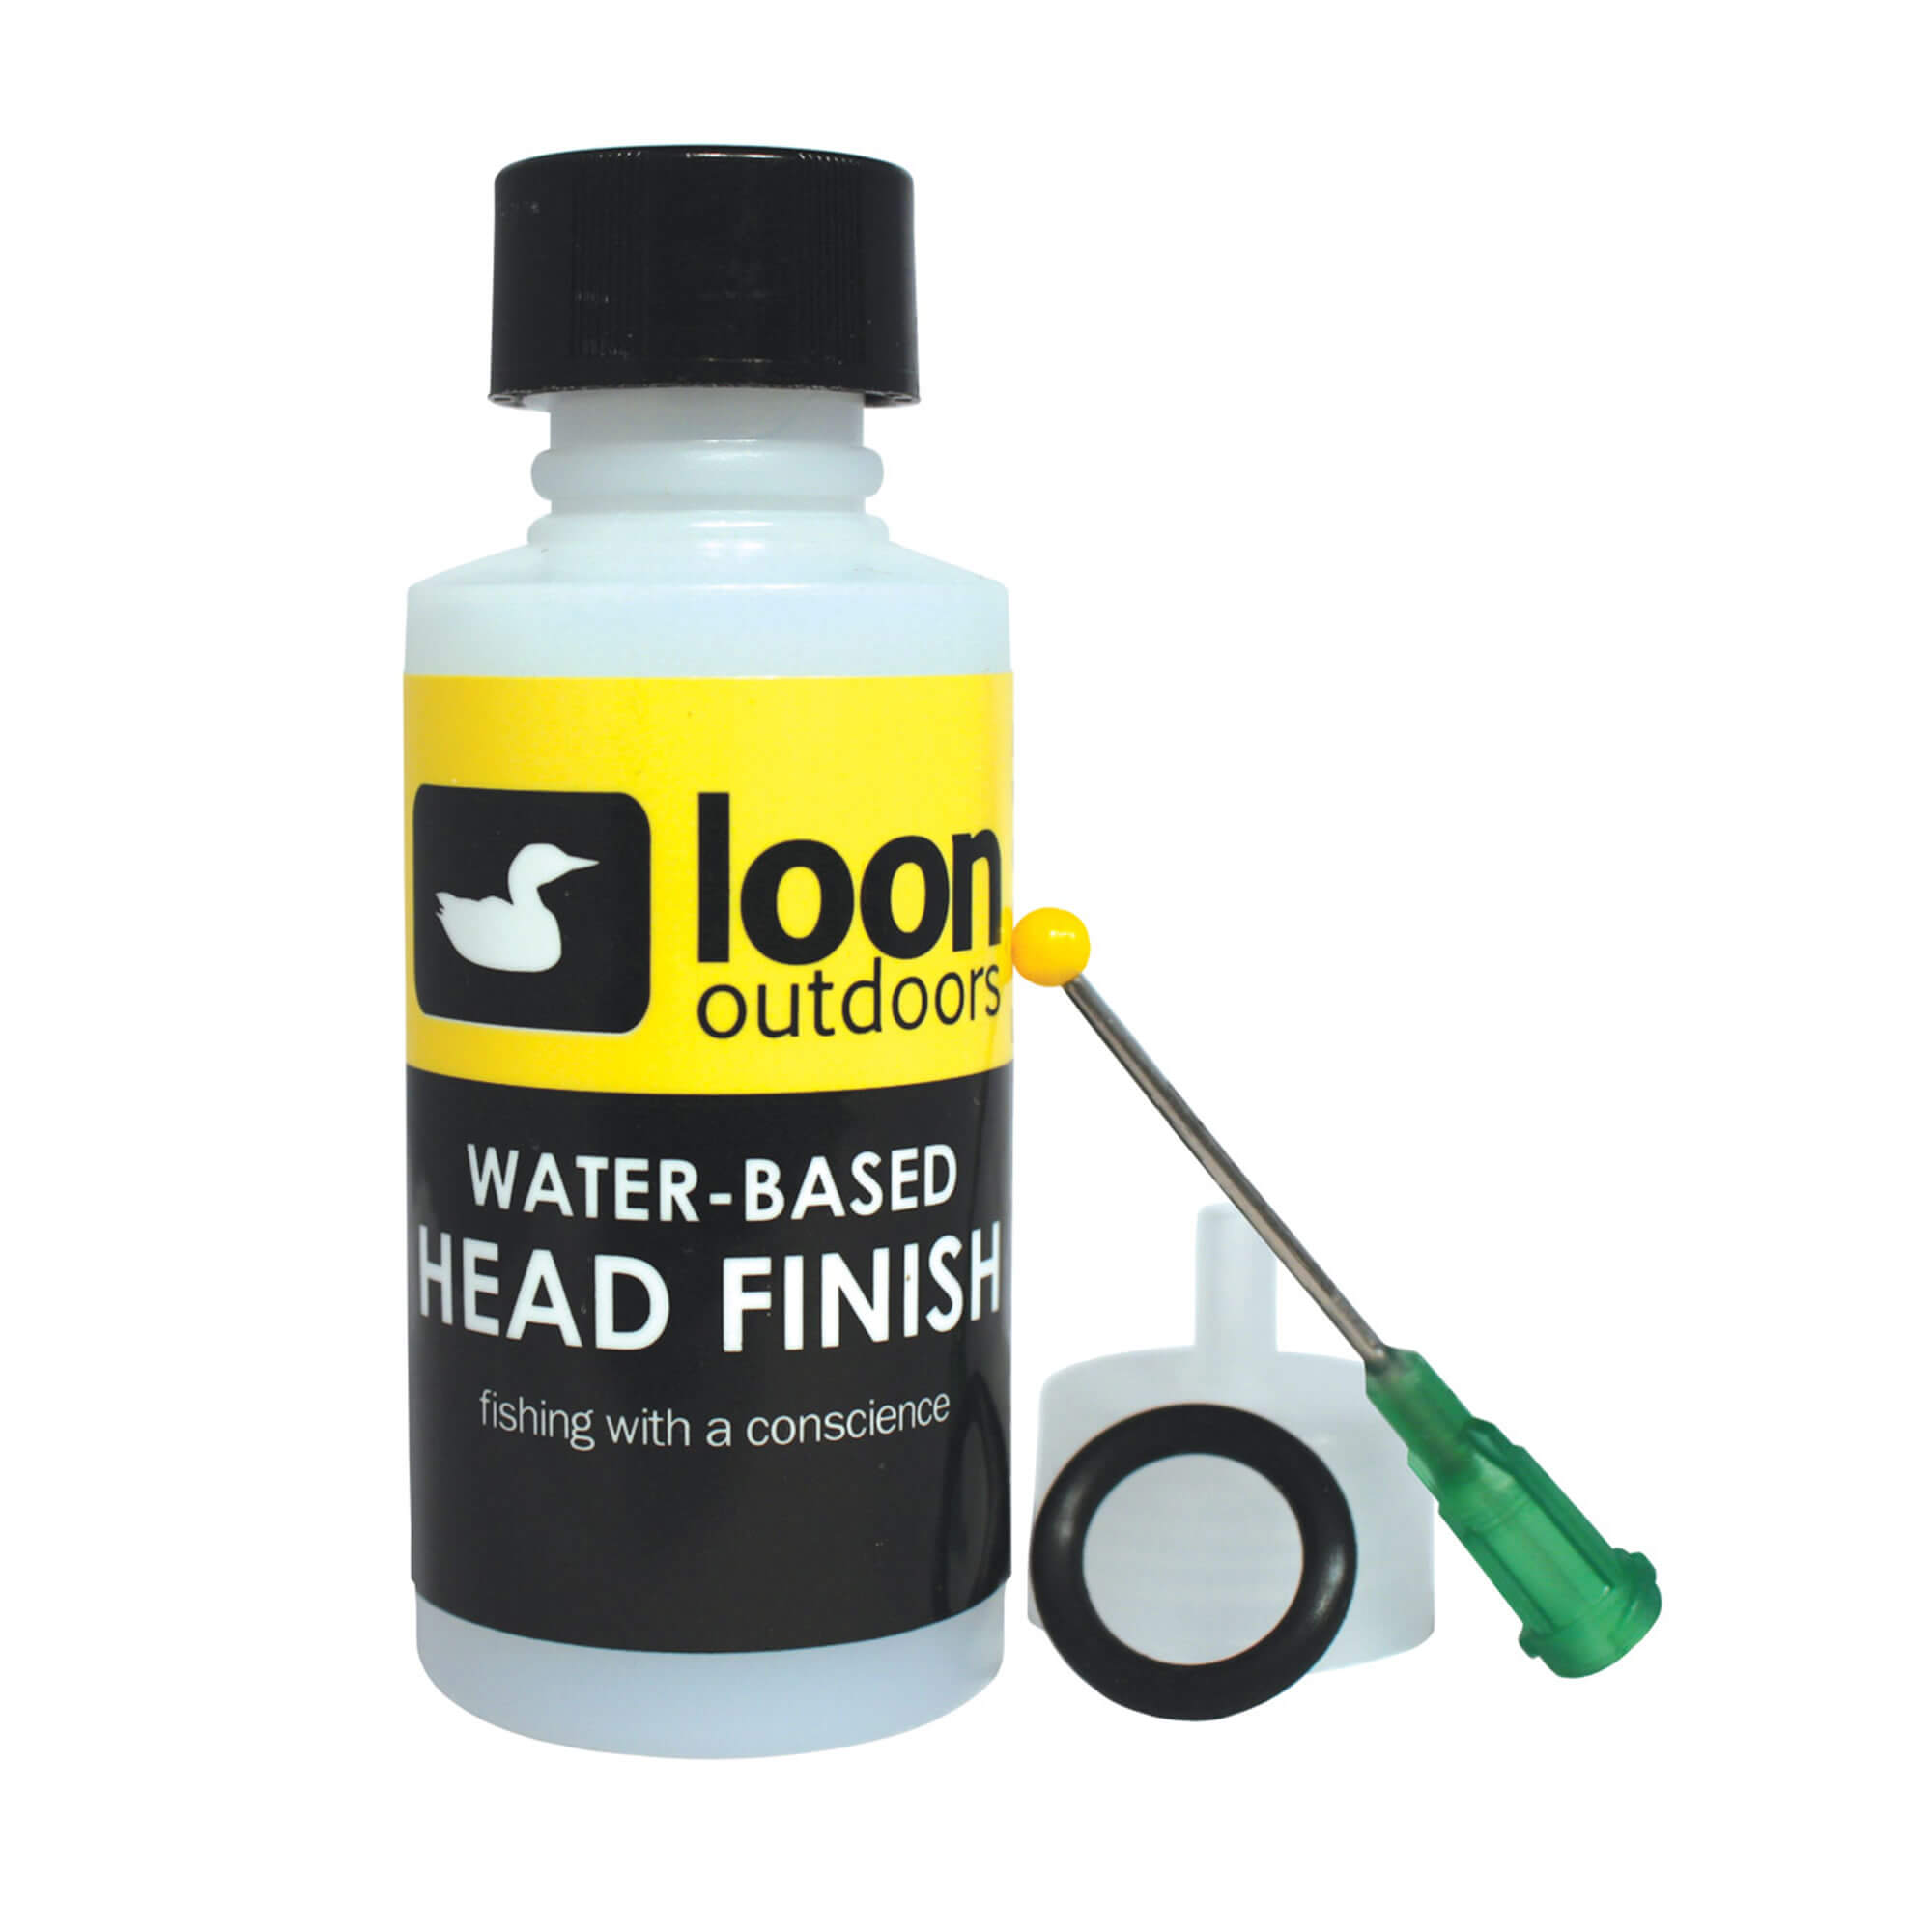 Loon Head Finish System